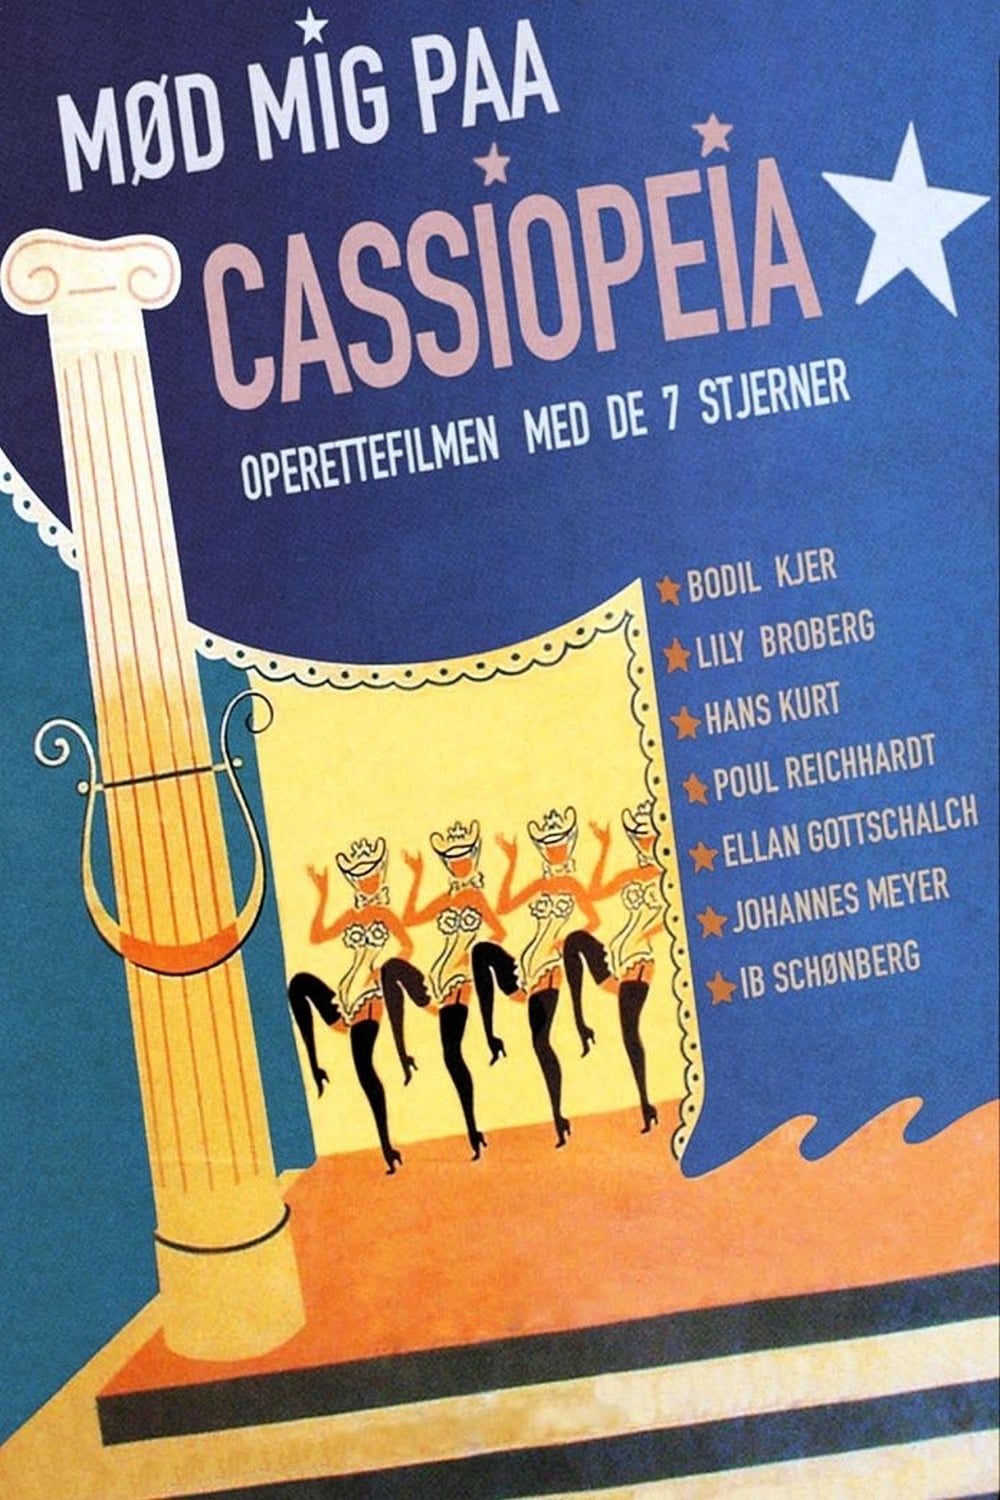 Meet Me on Cassiopeia (1951)